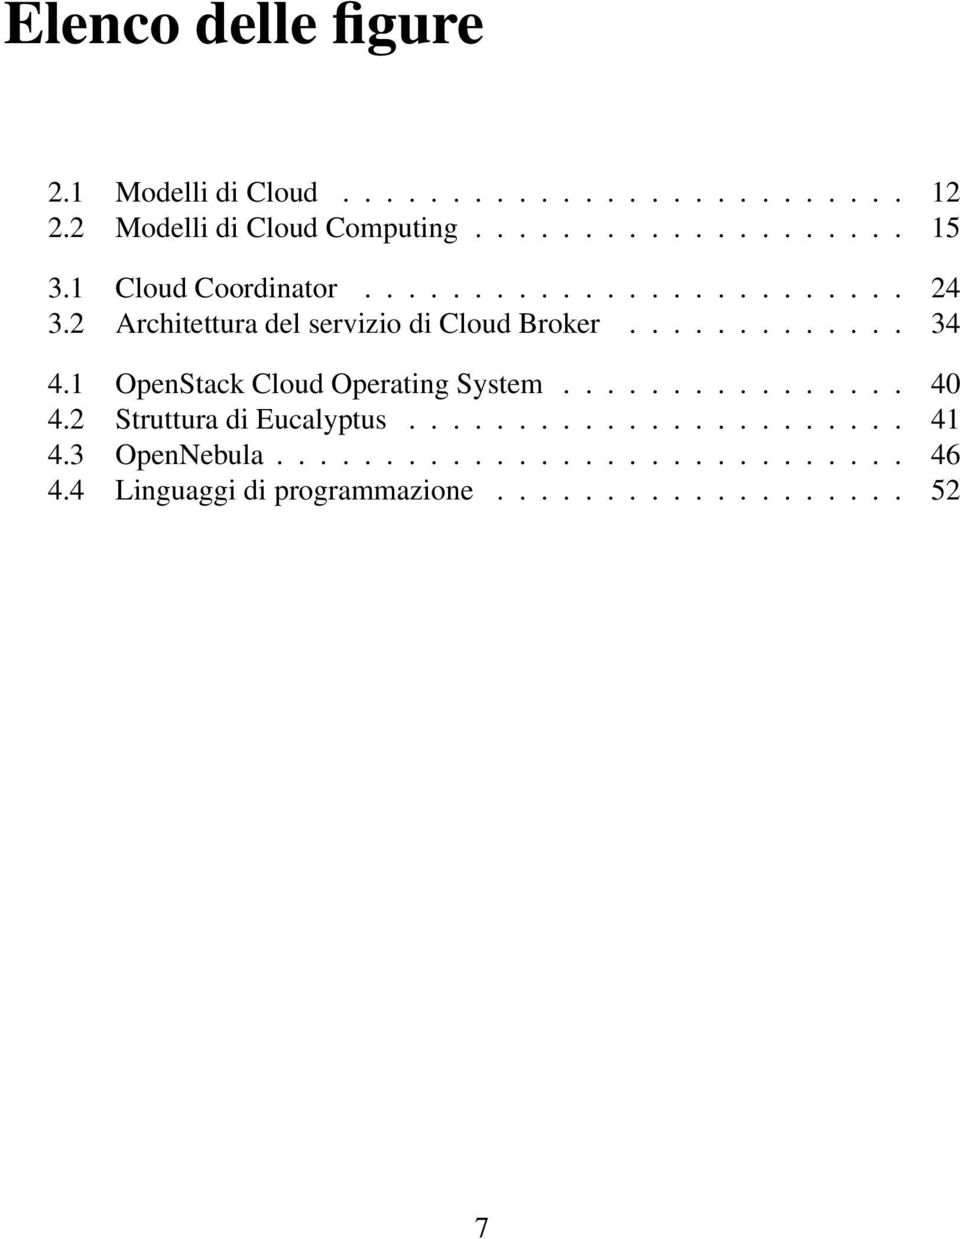 1 OpenStack Cloud Operating System................ 40 4.2 Struttura di Eucalyptus....................... 41 4.